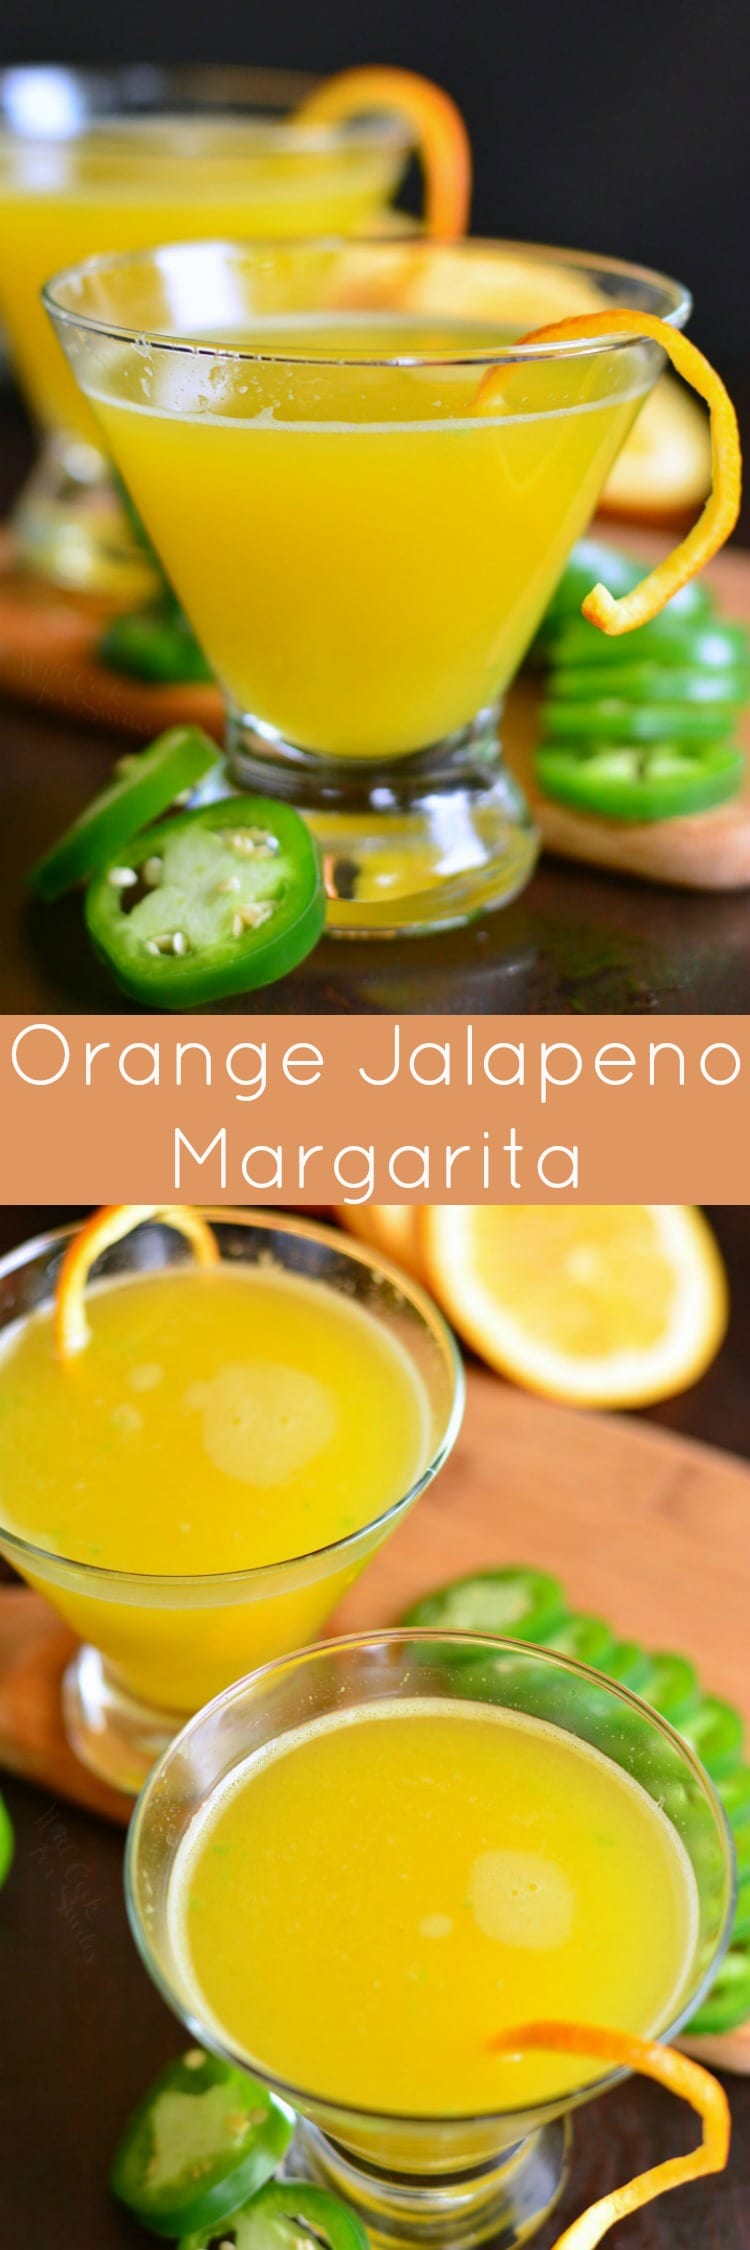 Orange Jalapeno Margarita in a glass with a orange garnish and jalapenos around it 